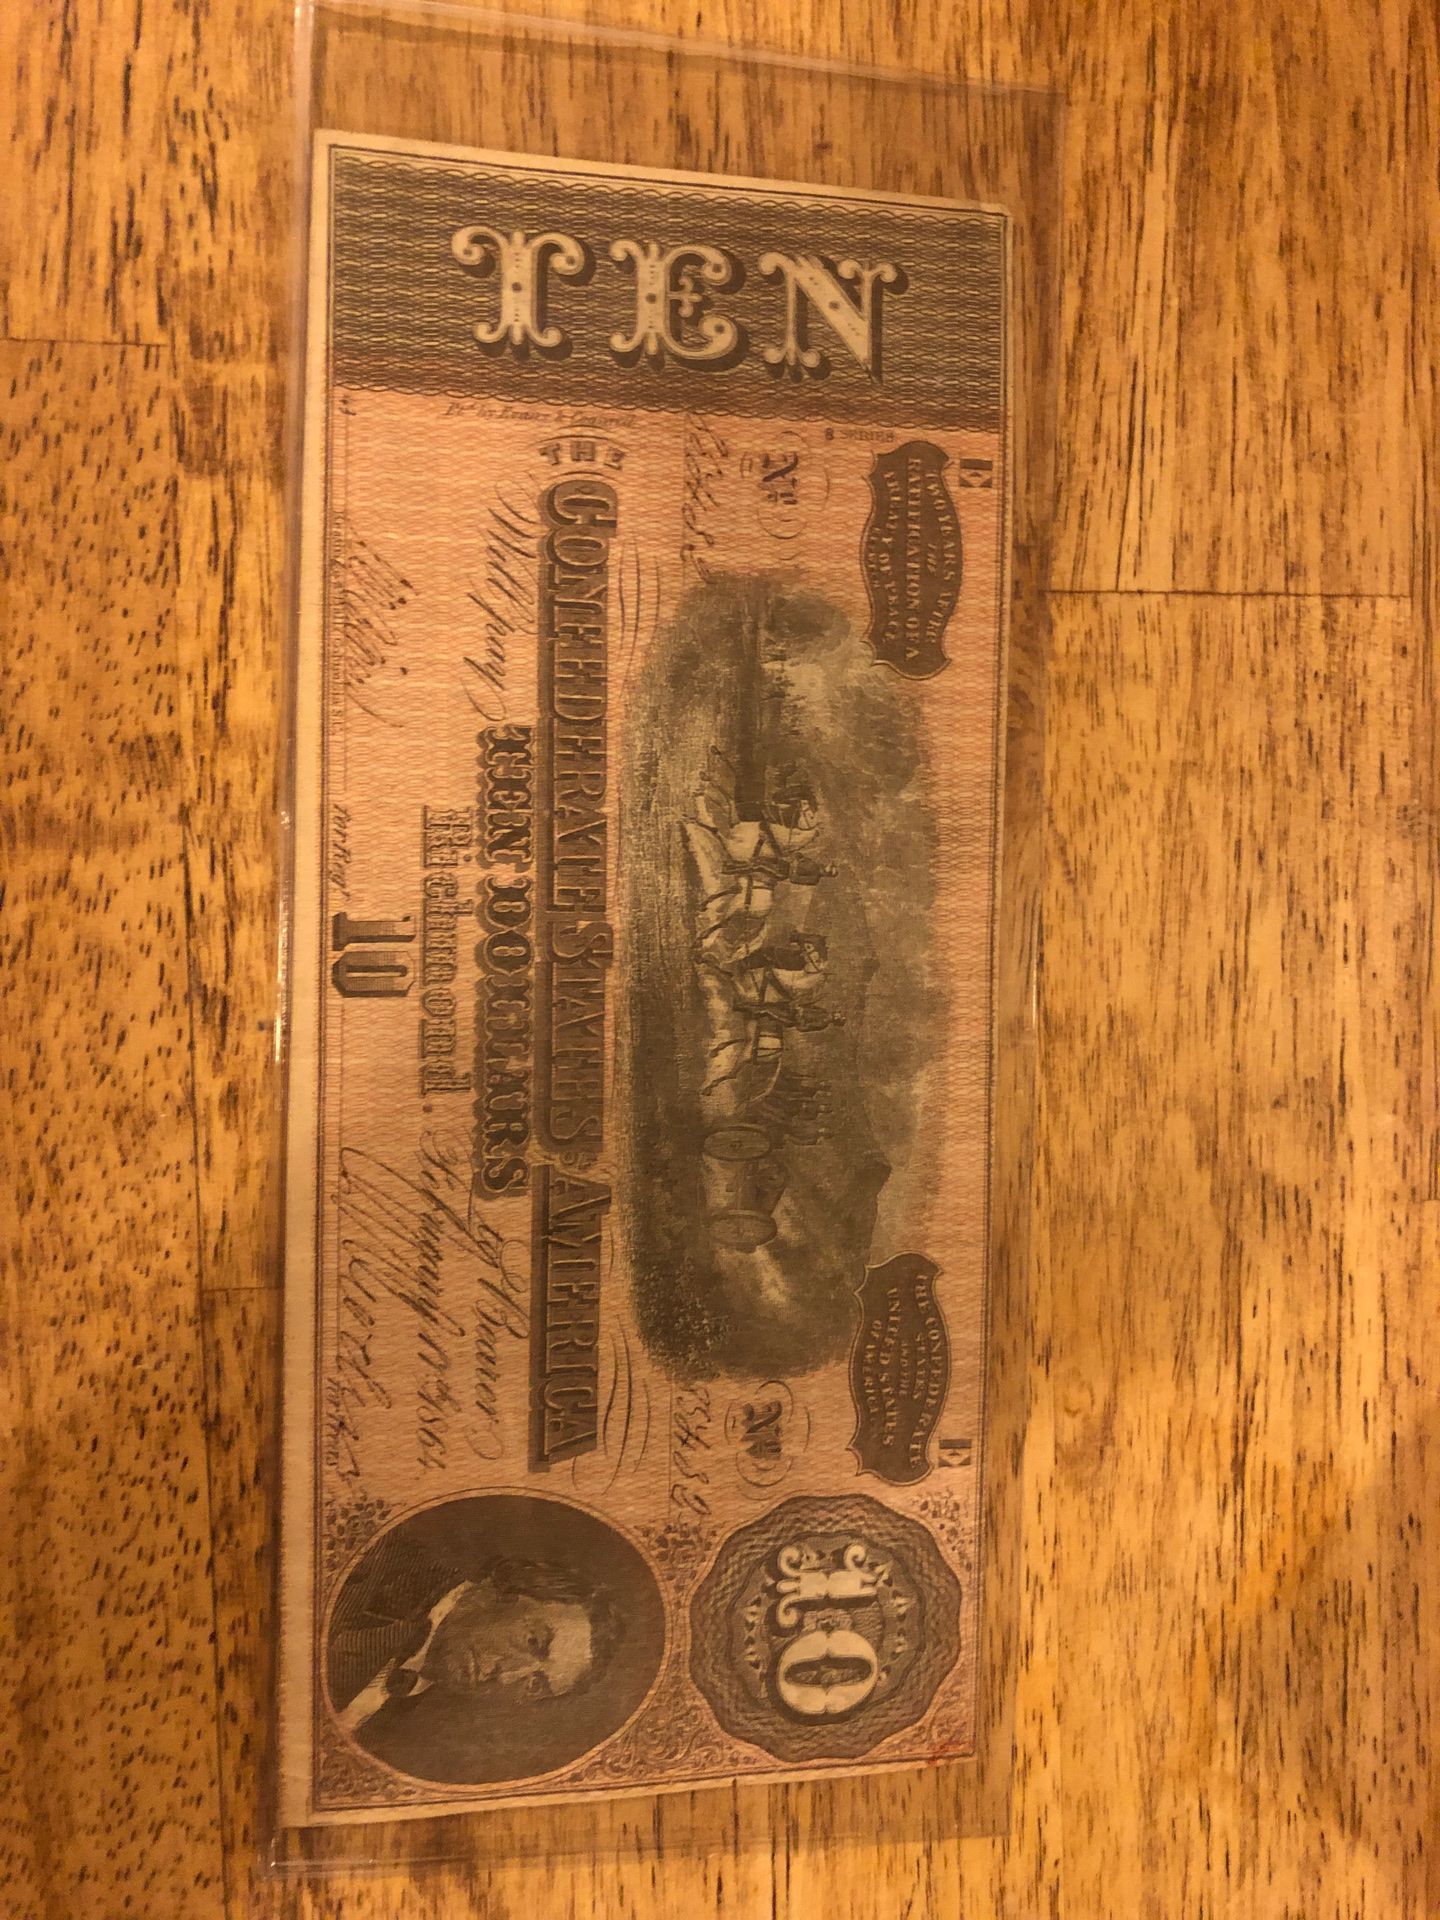 Confederate states of America 10$ Note